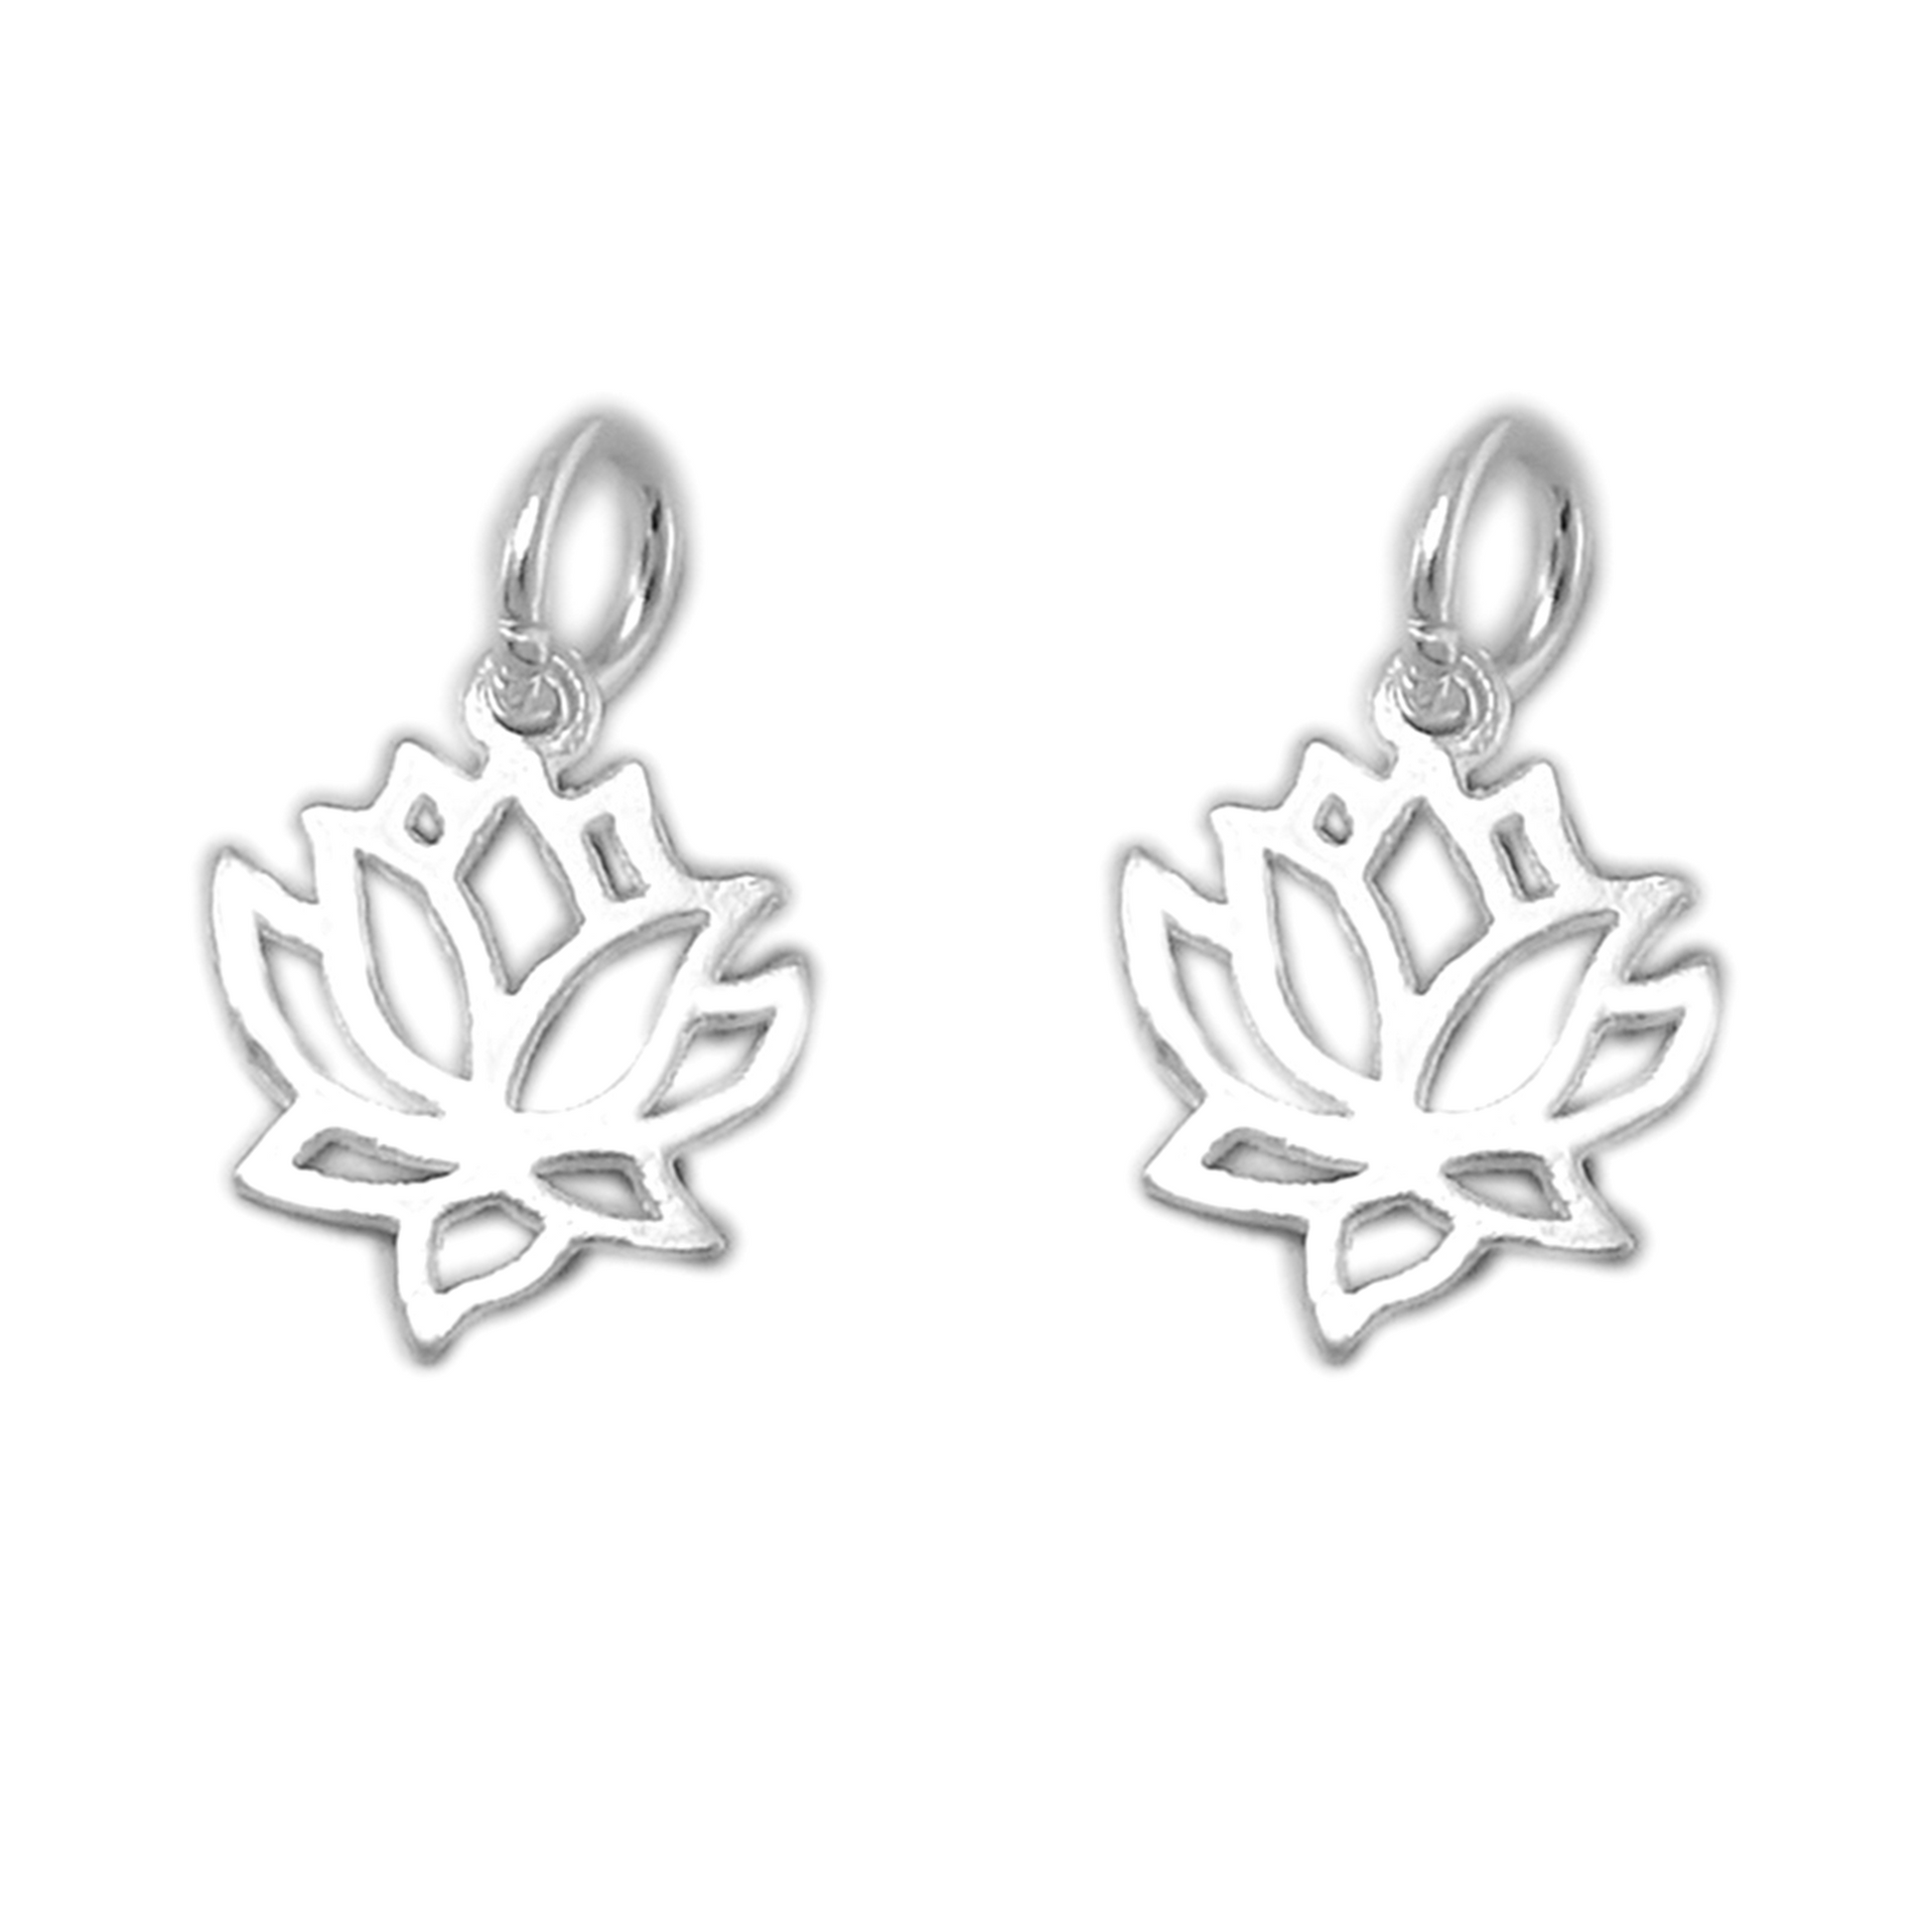 Sterling Silver Lotus Flower Yoga Zen Namaste Charm Pendants - sugarkittenlondon